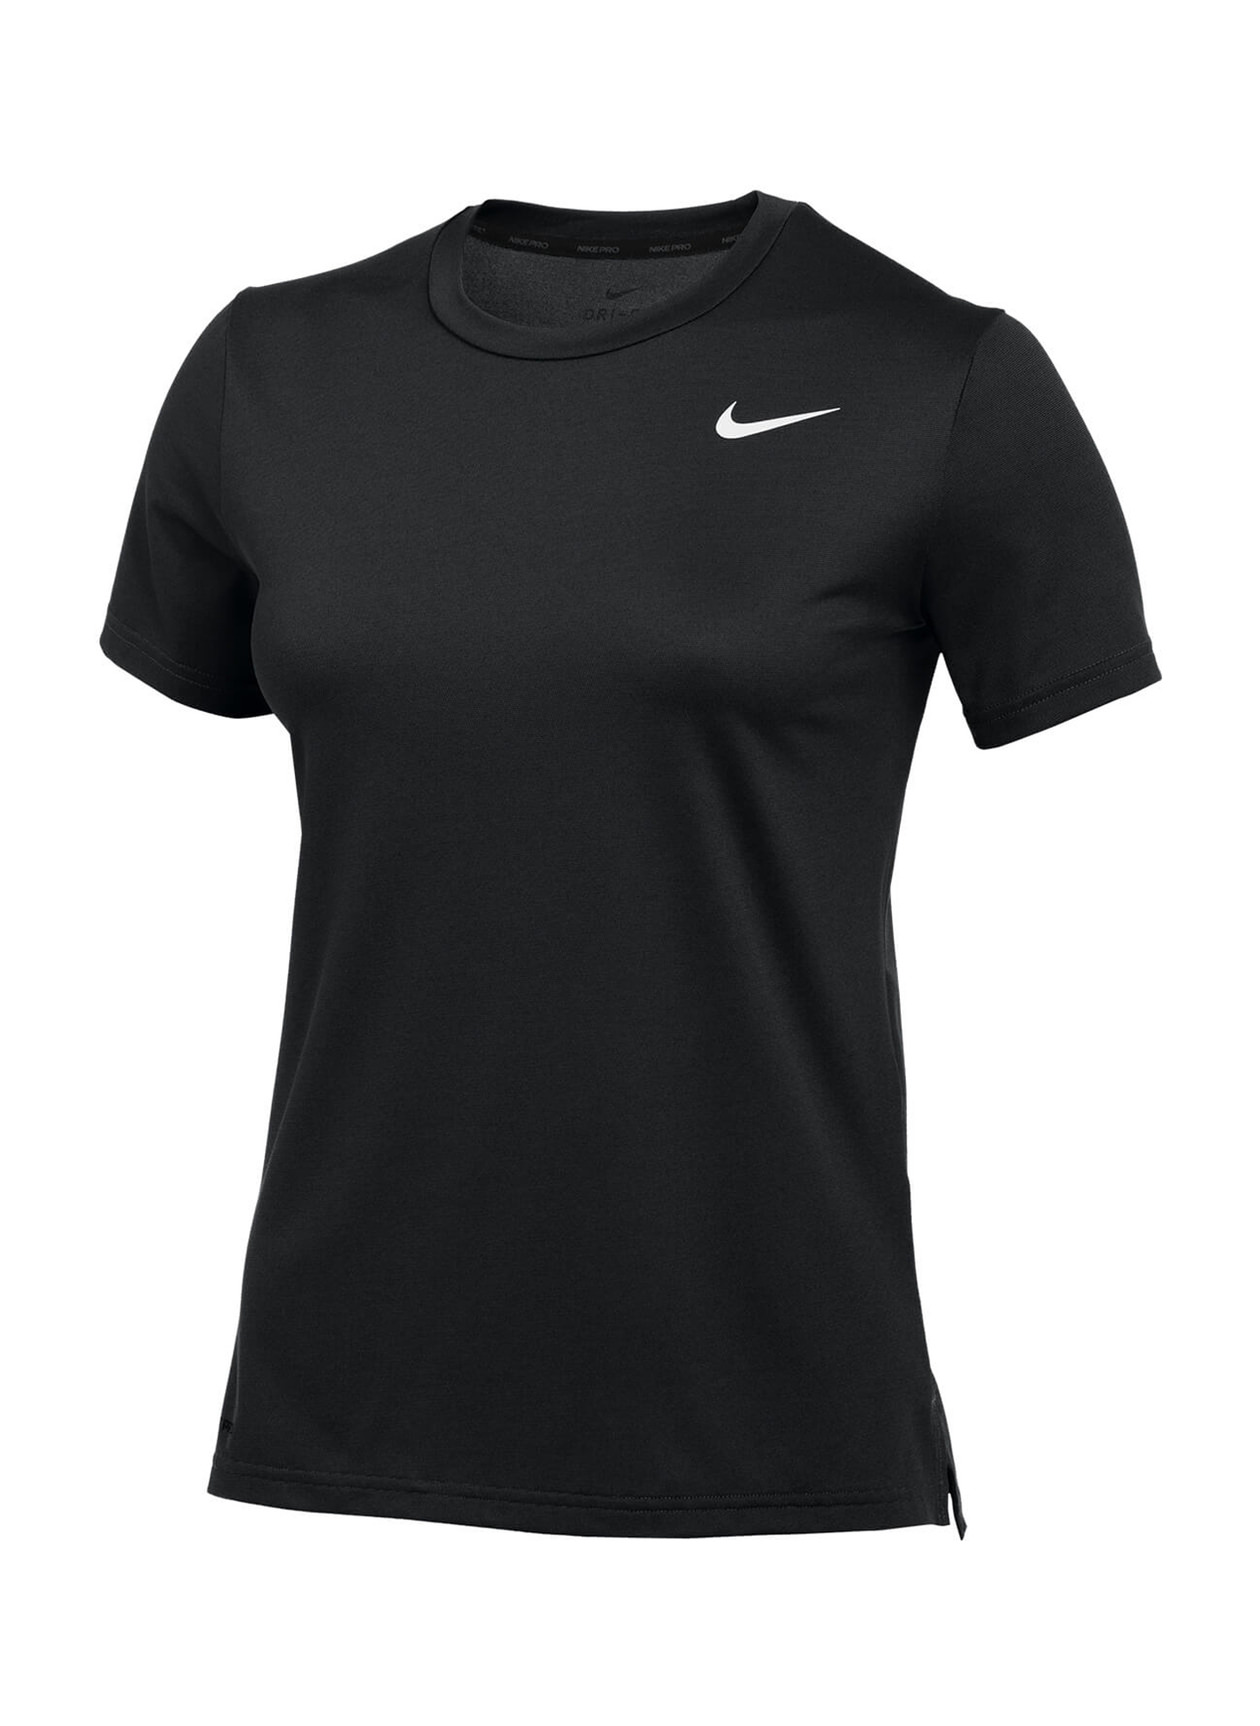 Nike Women's Team Black / Heather Pro Training T-Shirt